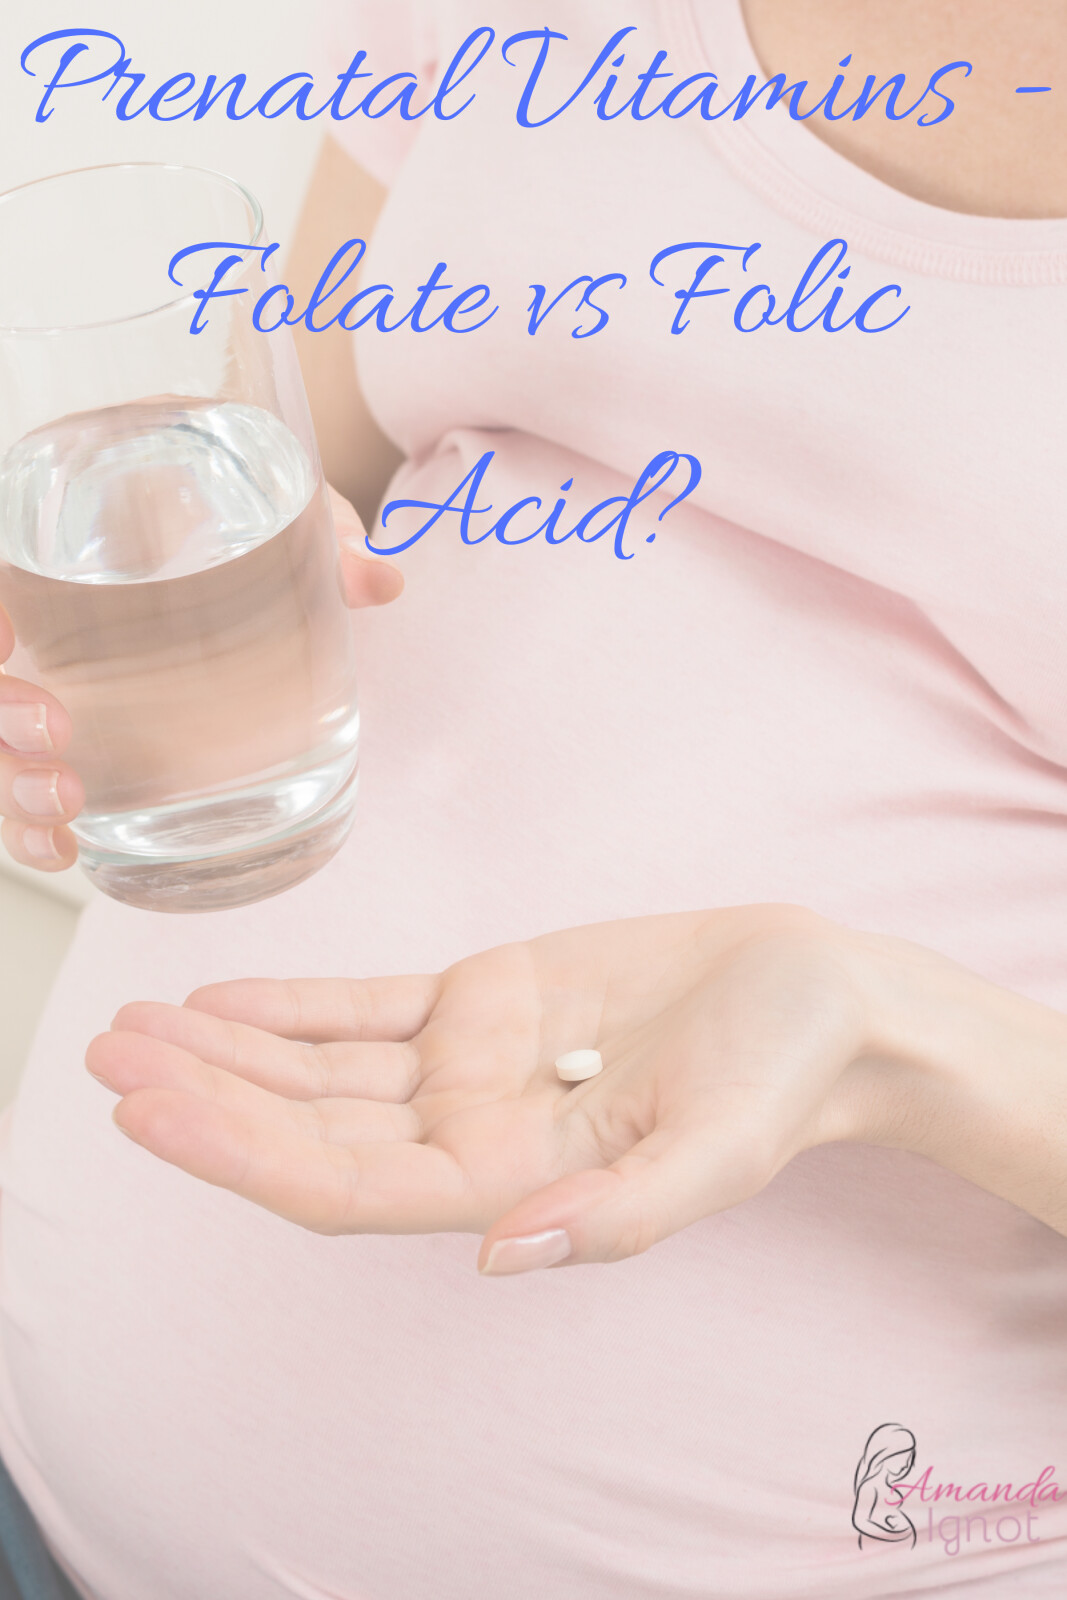 Prenatal Vitamins - Folate vs Folic Acid